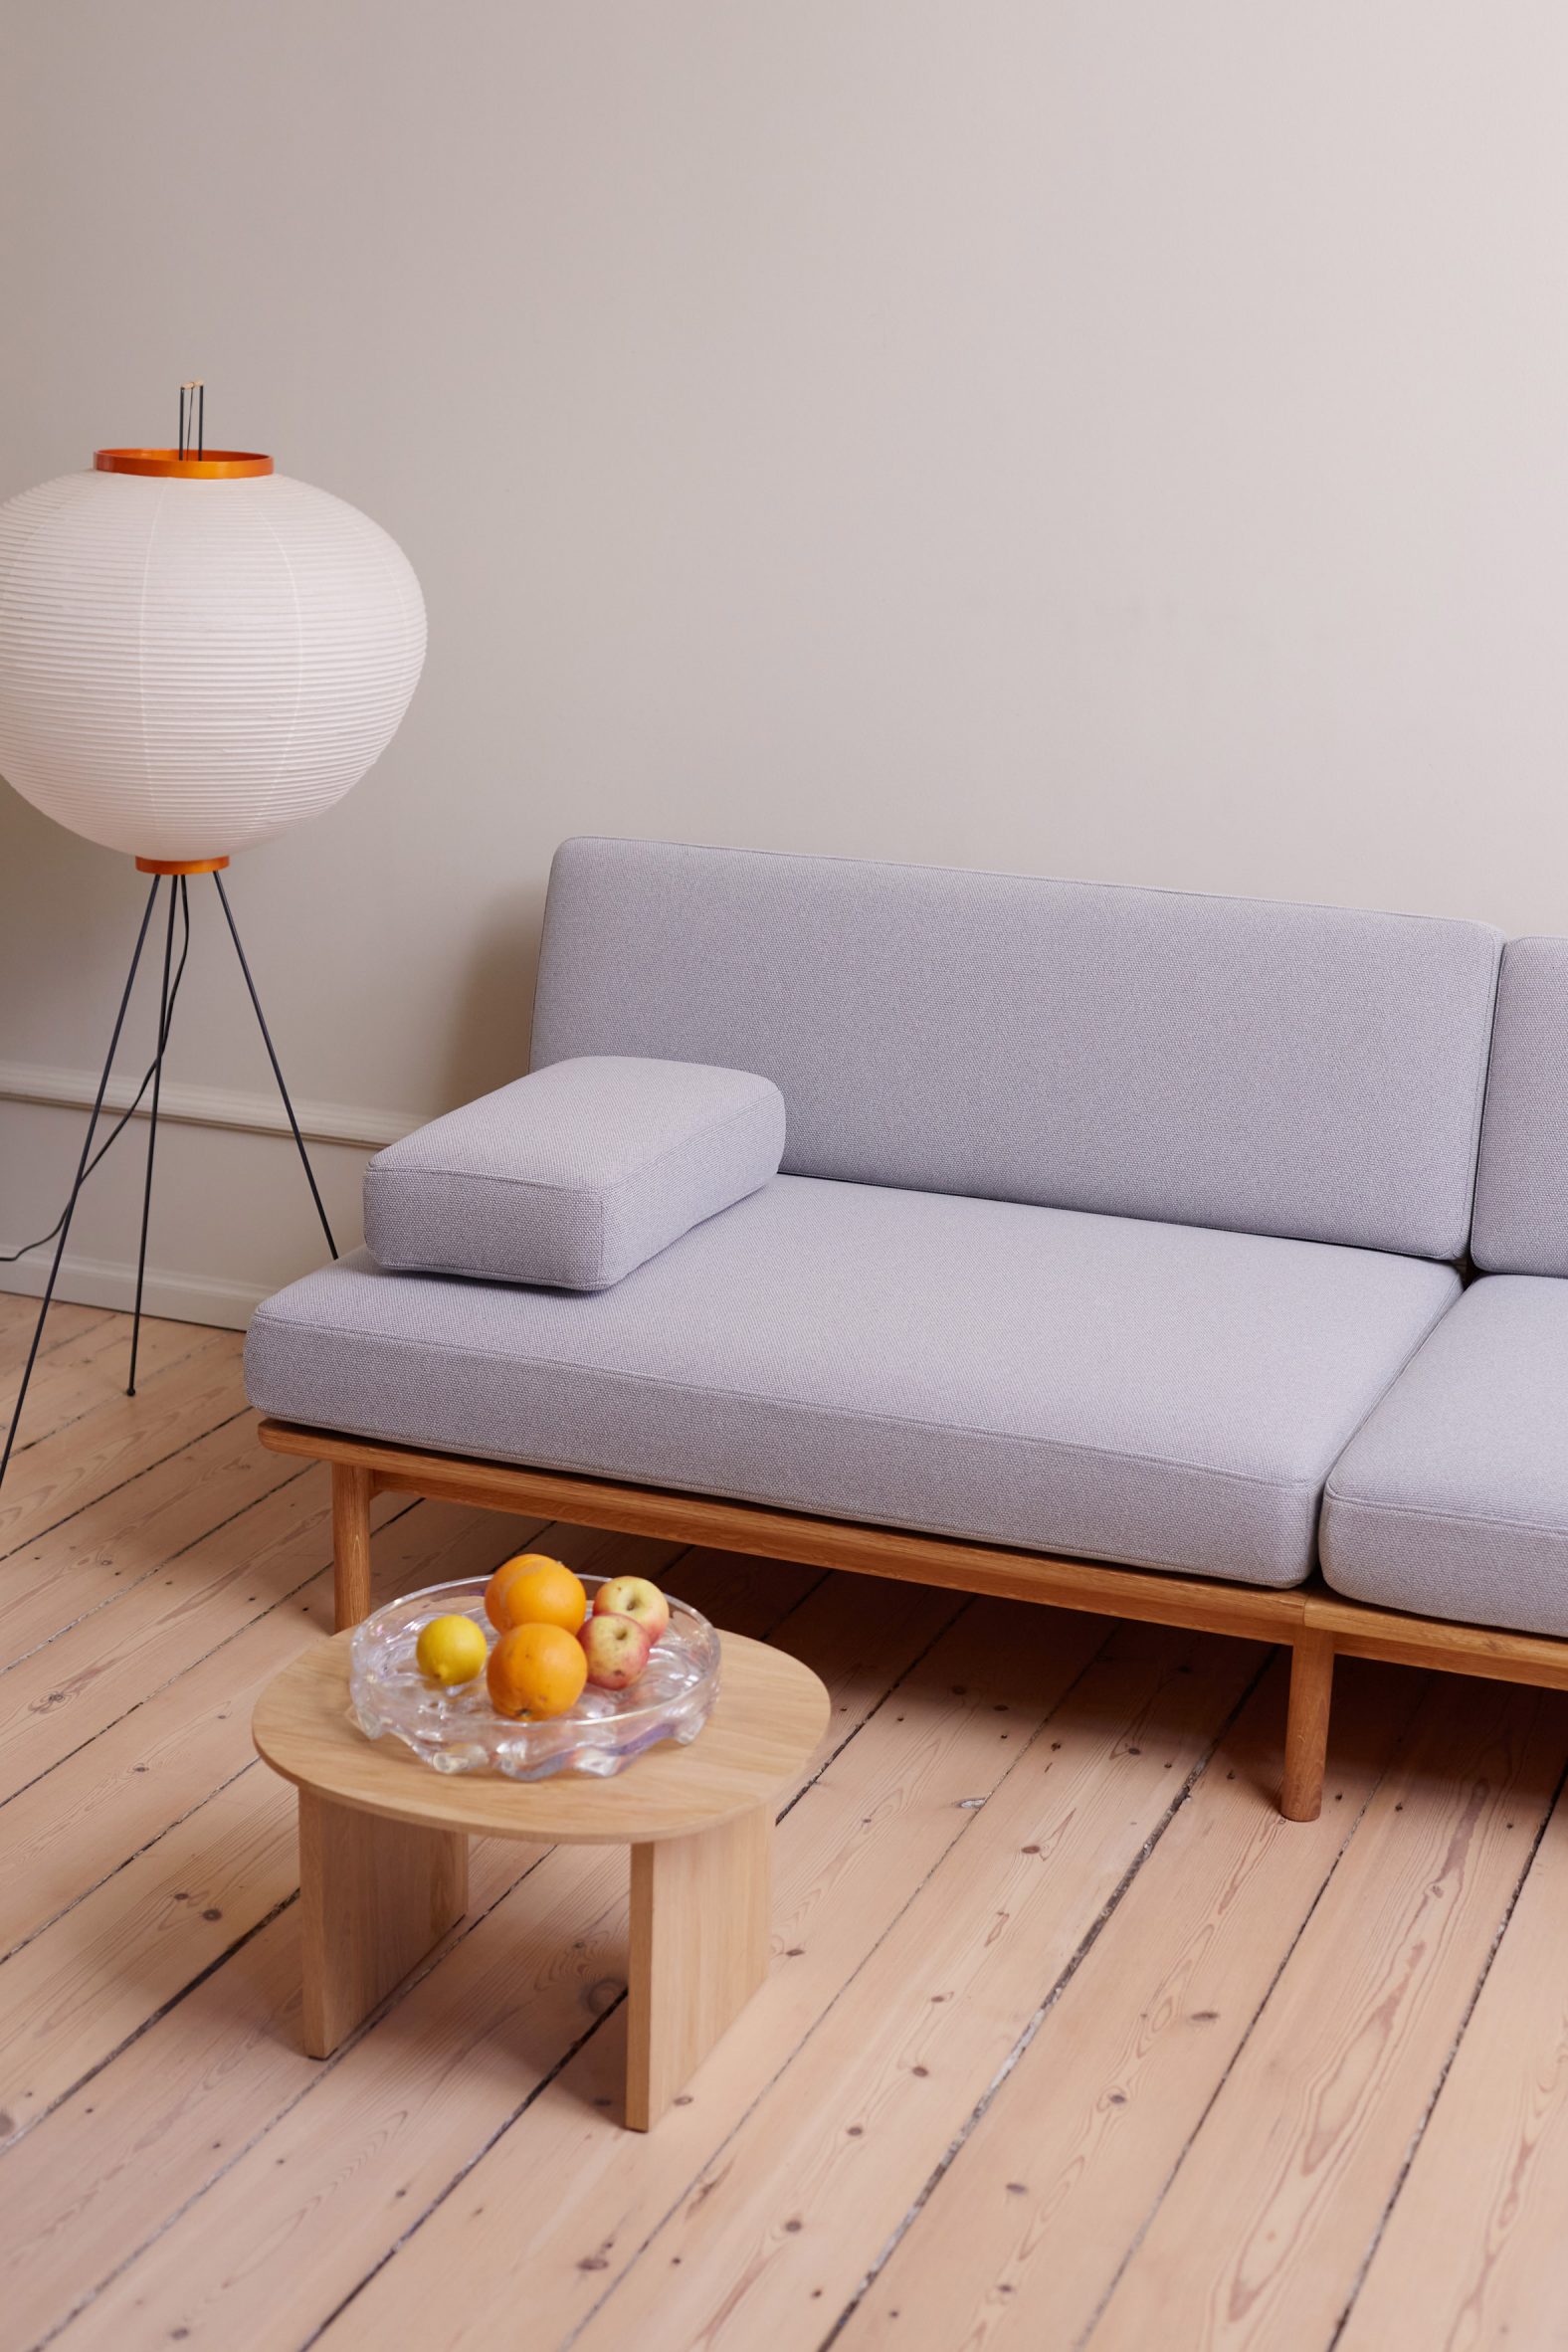 Takt Creates Flat Pack Sofa That Is